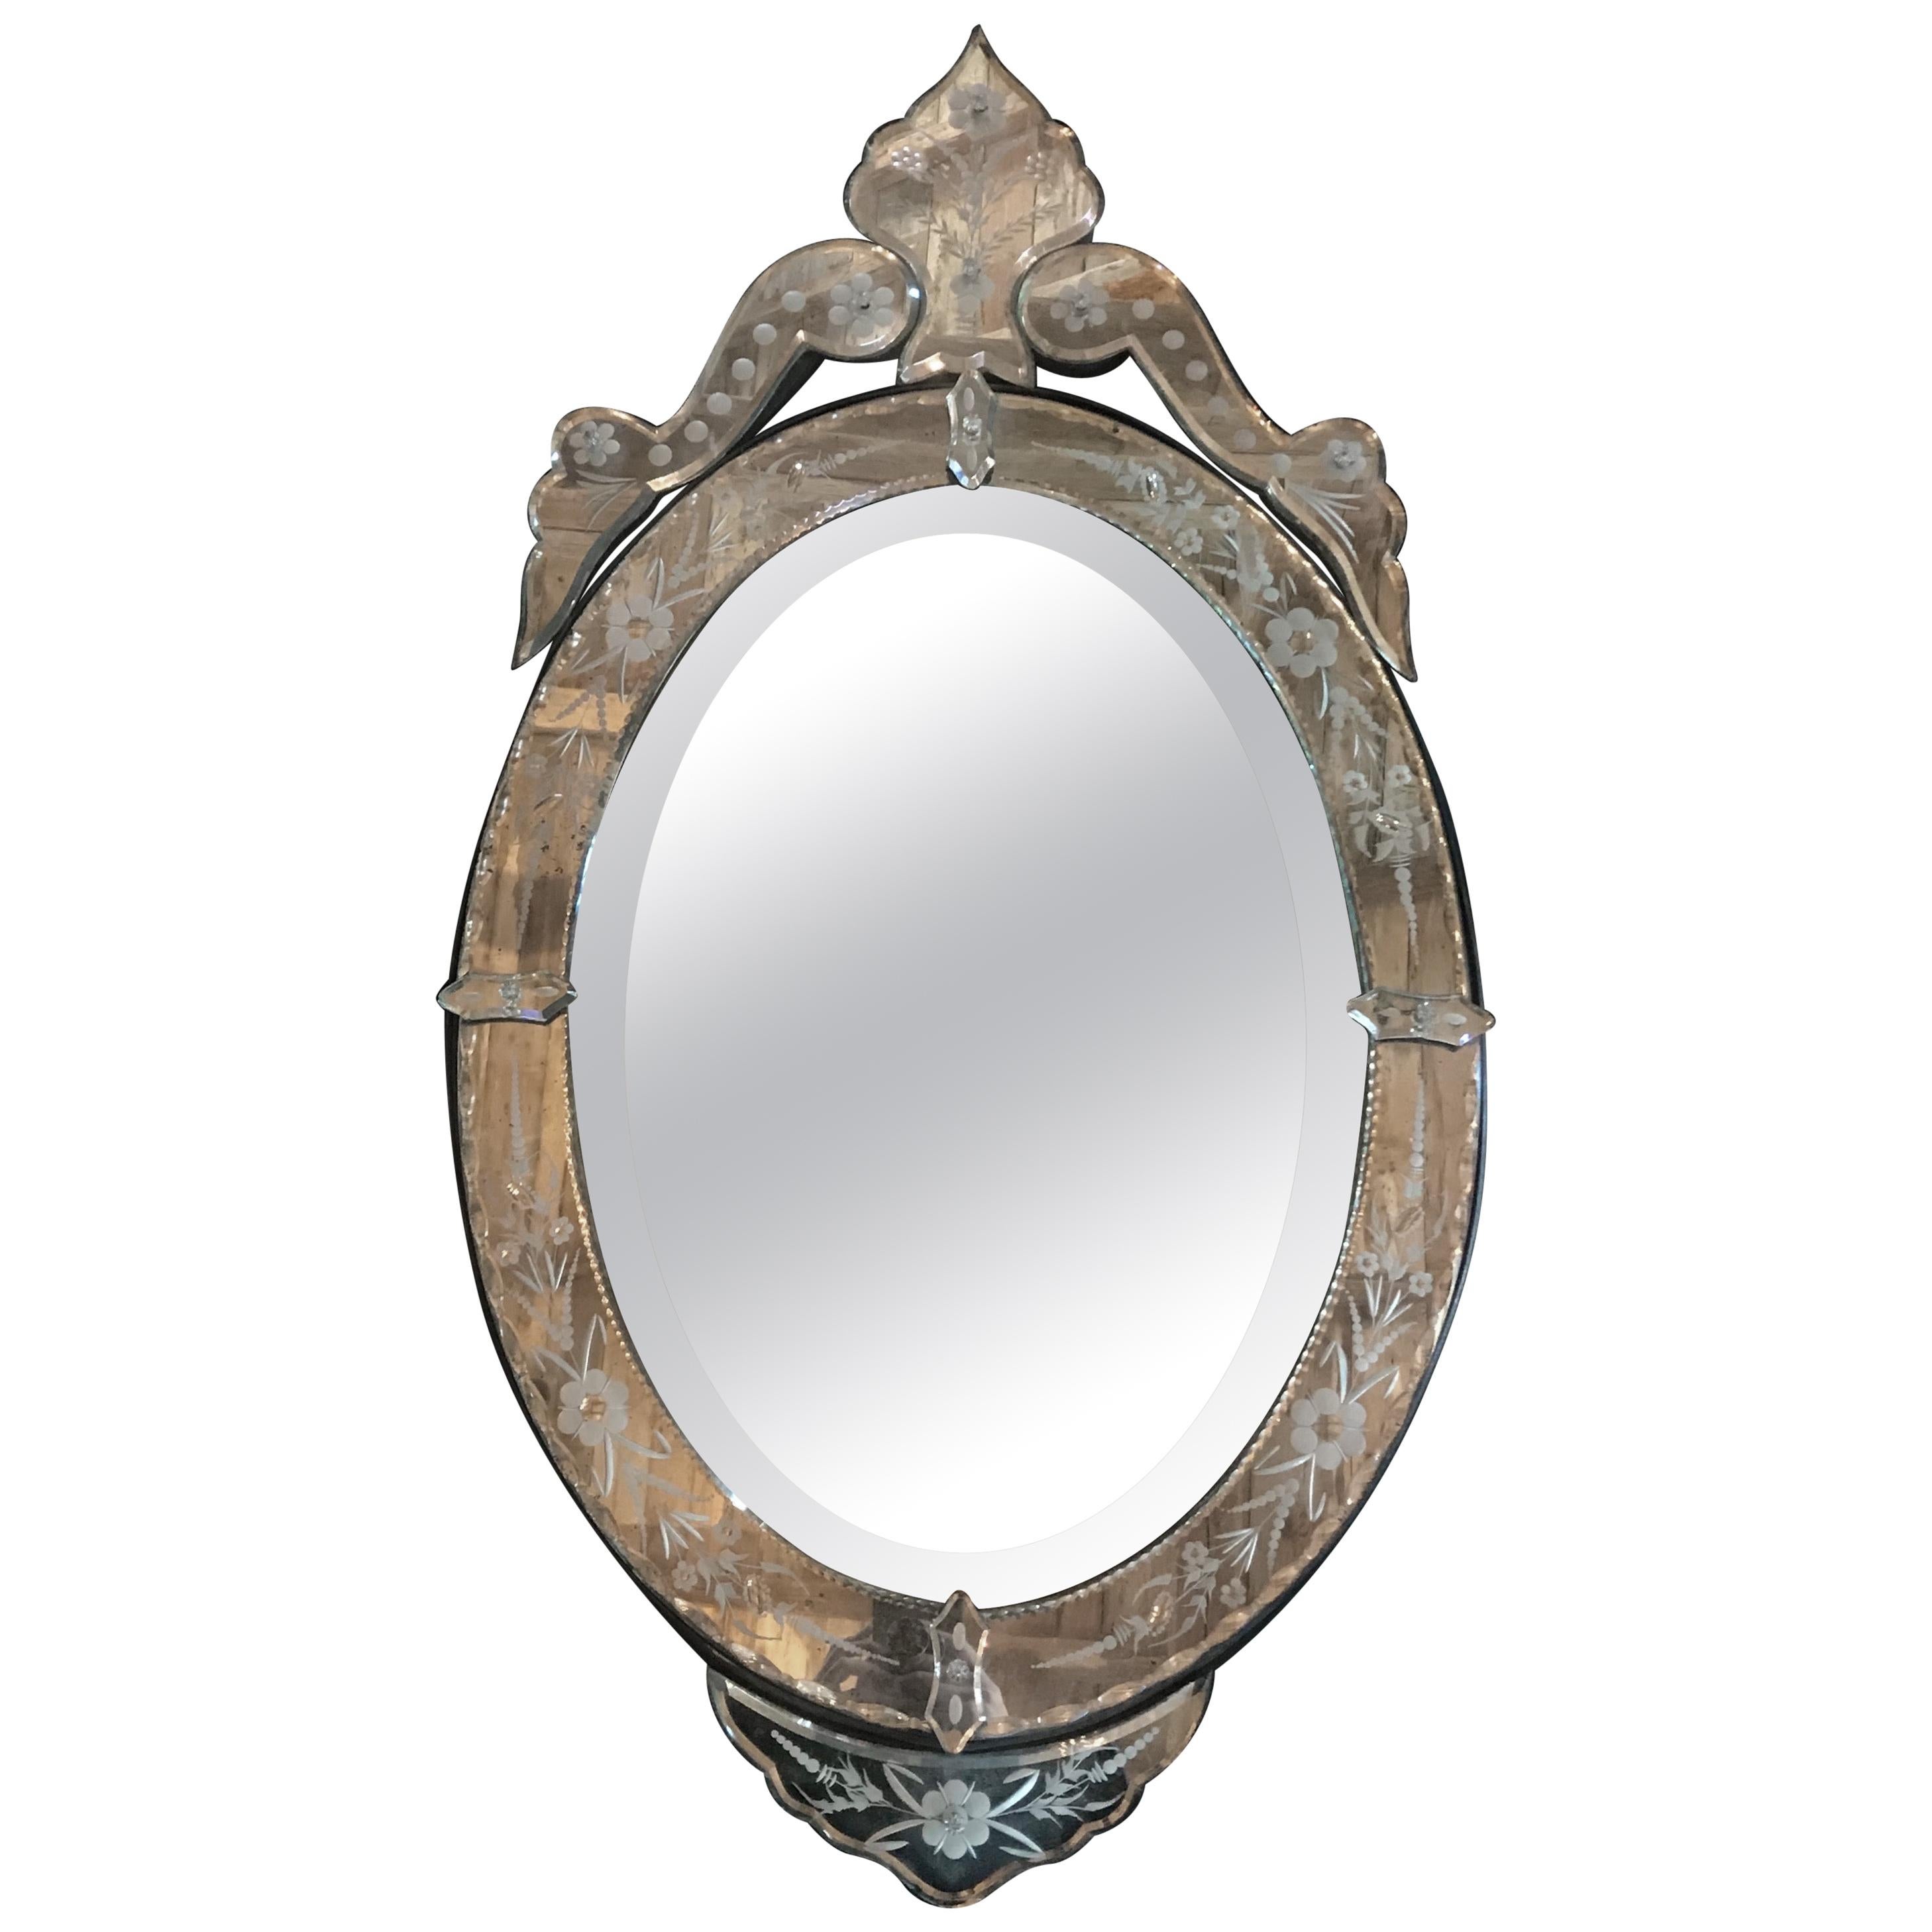 Glamorous French Venetian Glass Oval Beveled Mirror